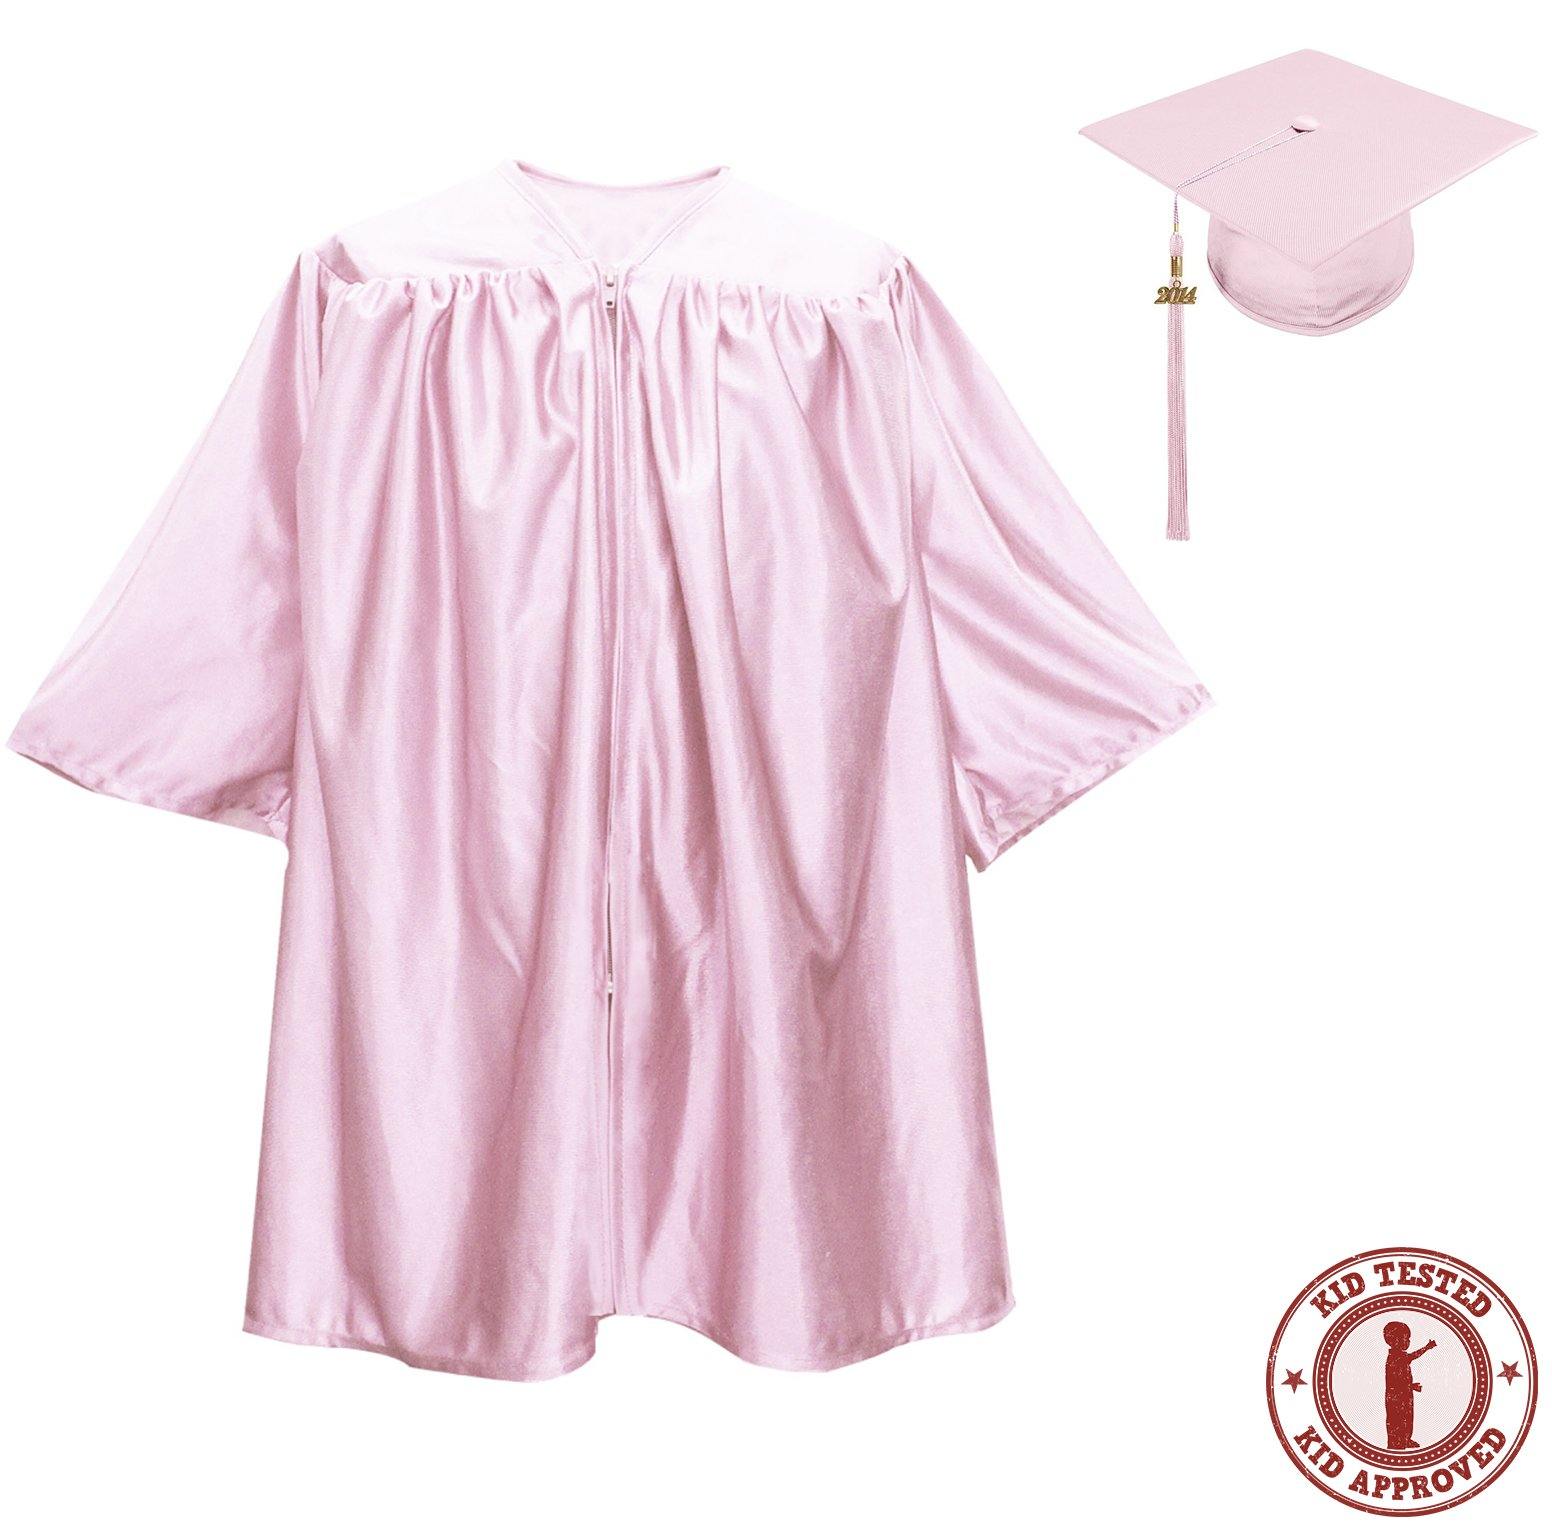 Pink Matte Nursery Graduation Gown and Cap – My Graduation Day (MGD)